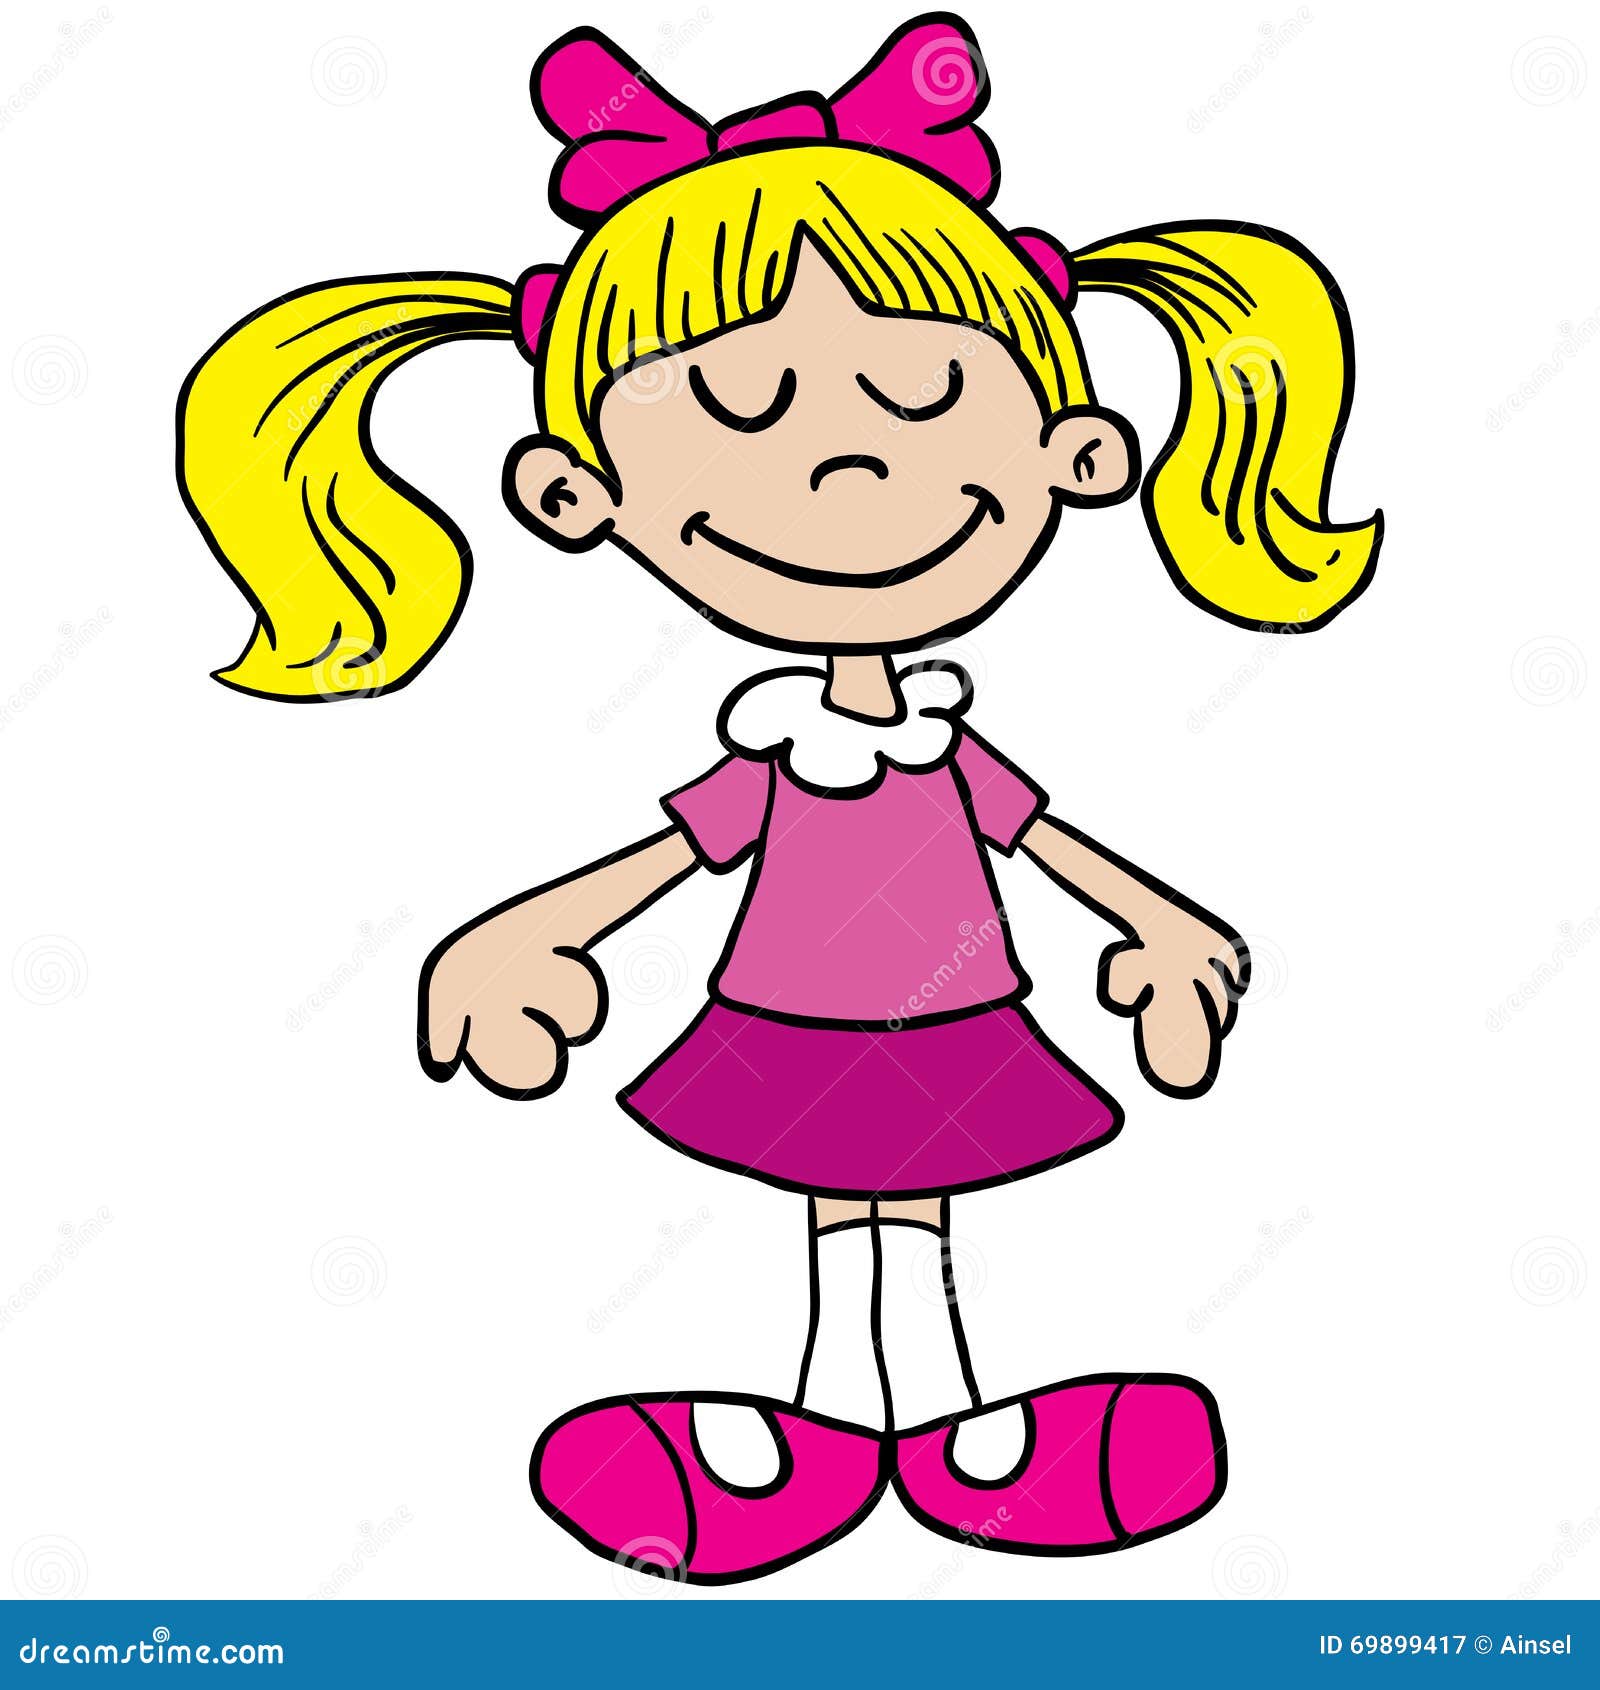 Little Girl In Pink Dress Cartoon Stock Illustration - Image: 69899417